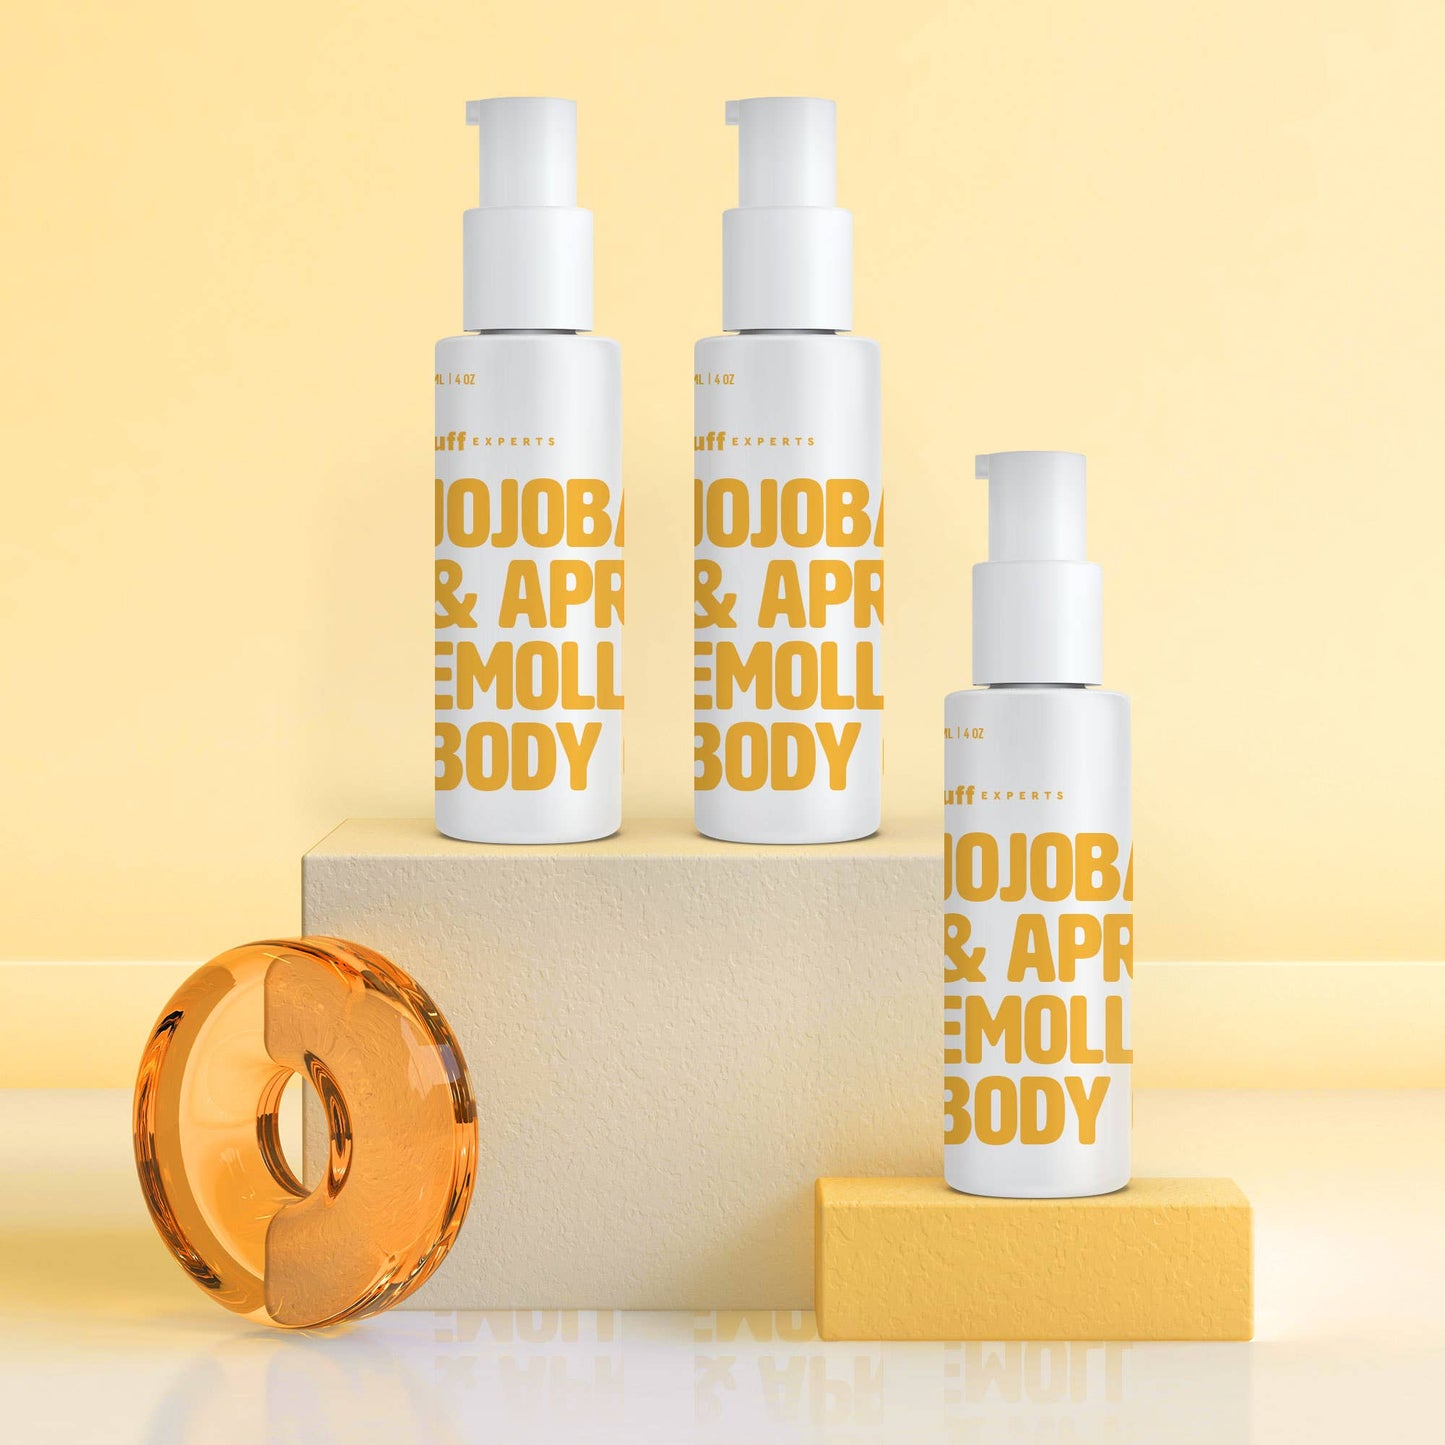 Jojoba & Apricot Emollient Body Oil